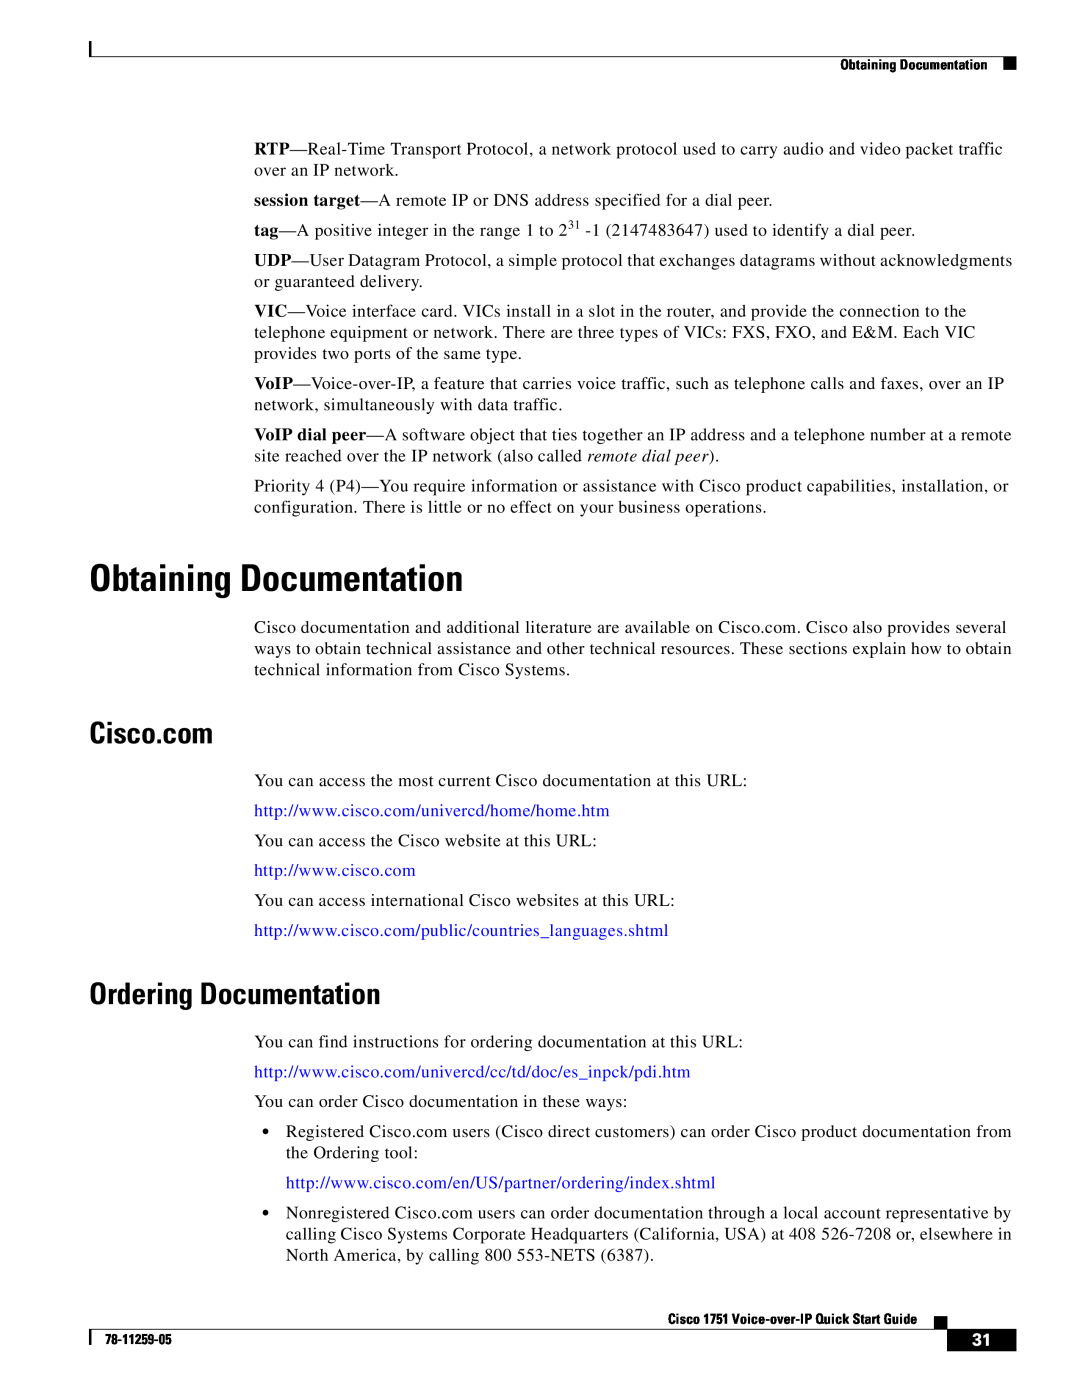 Cisco Systems CISCO1751 quick start Obtaining Documentation, Cisco.com, Ordering Documentation 